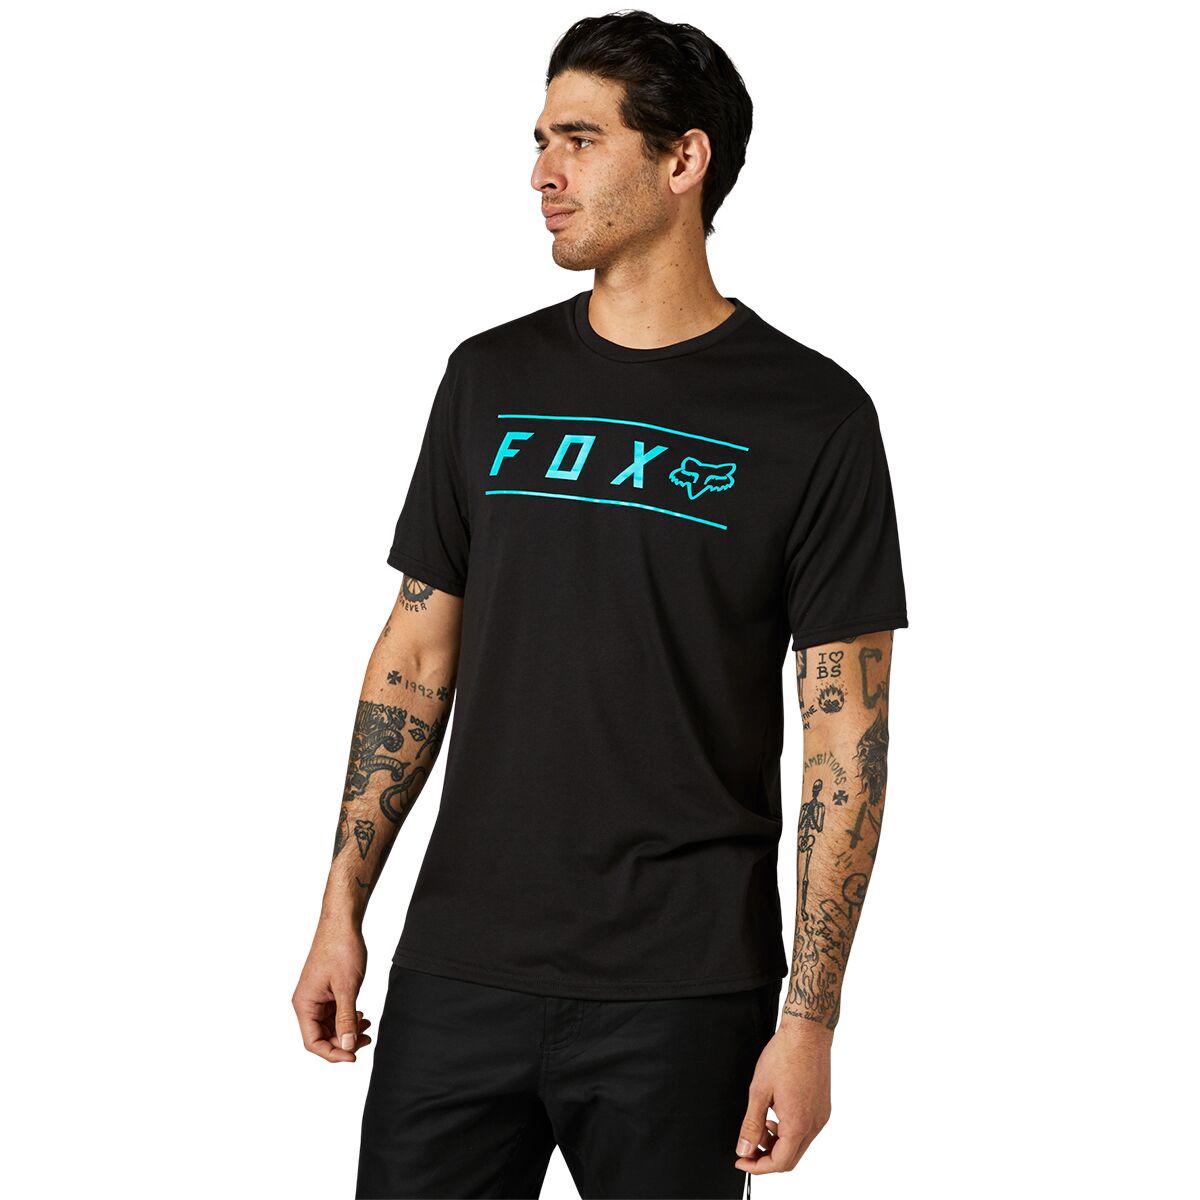 Fox Racing Pinnacle Short-Sleeve Tech T-Shirt - Men's - Men